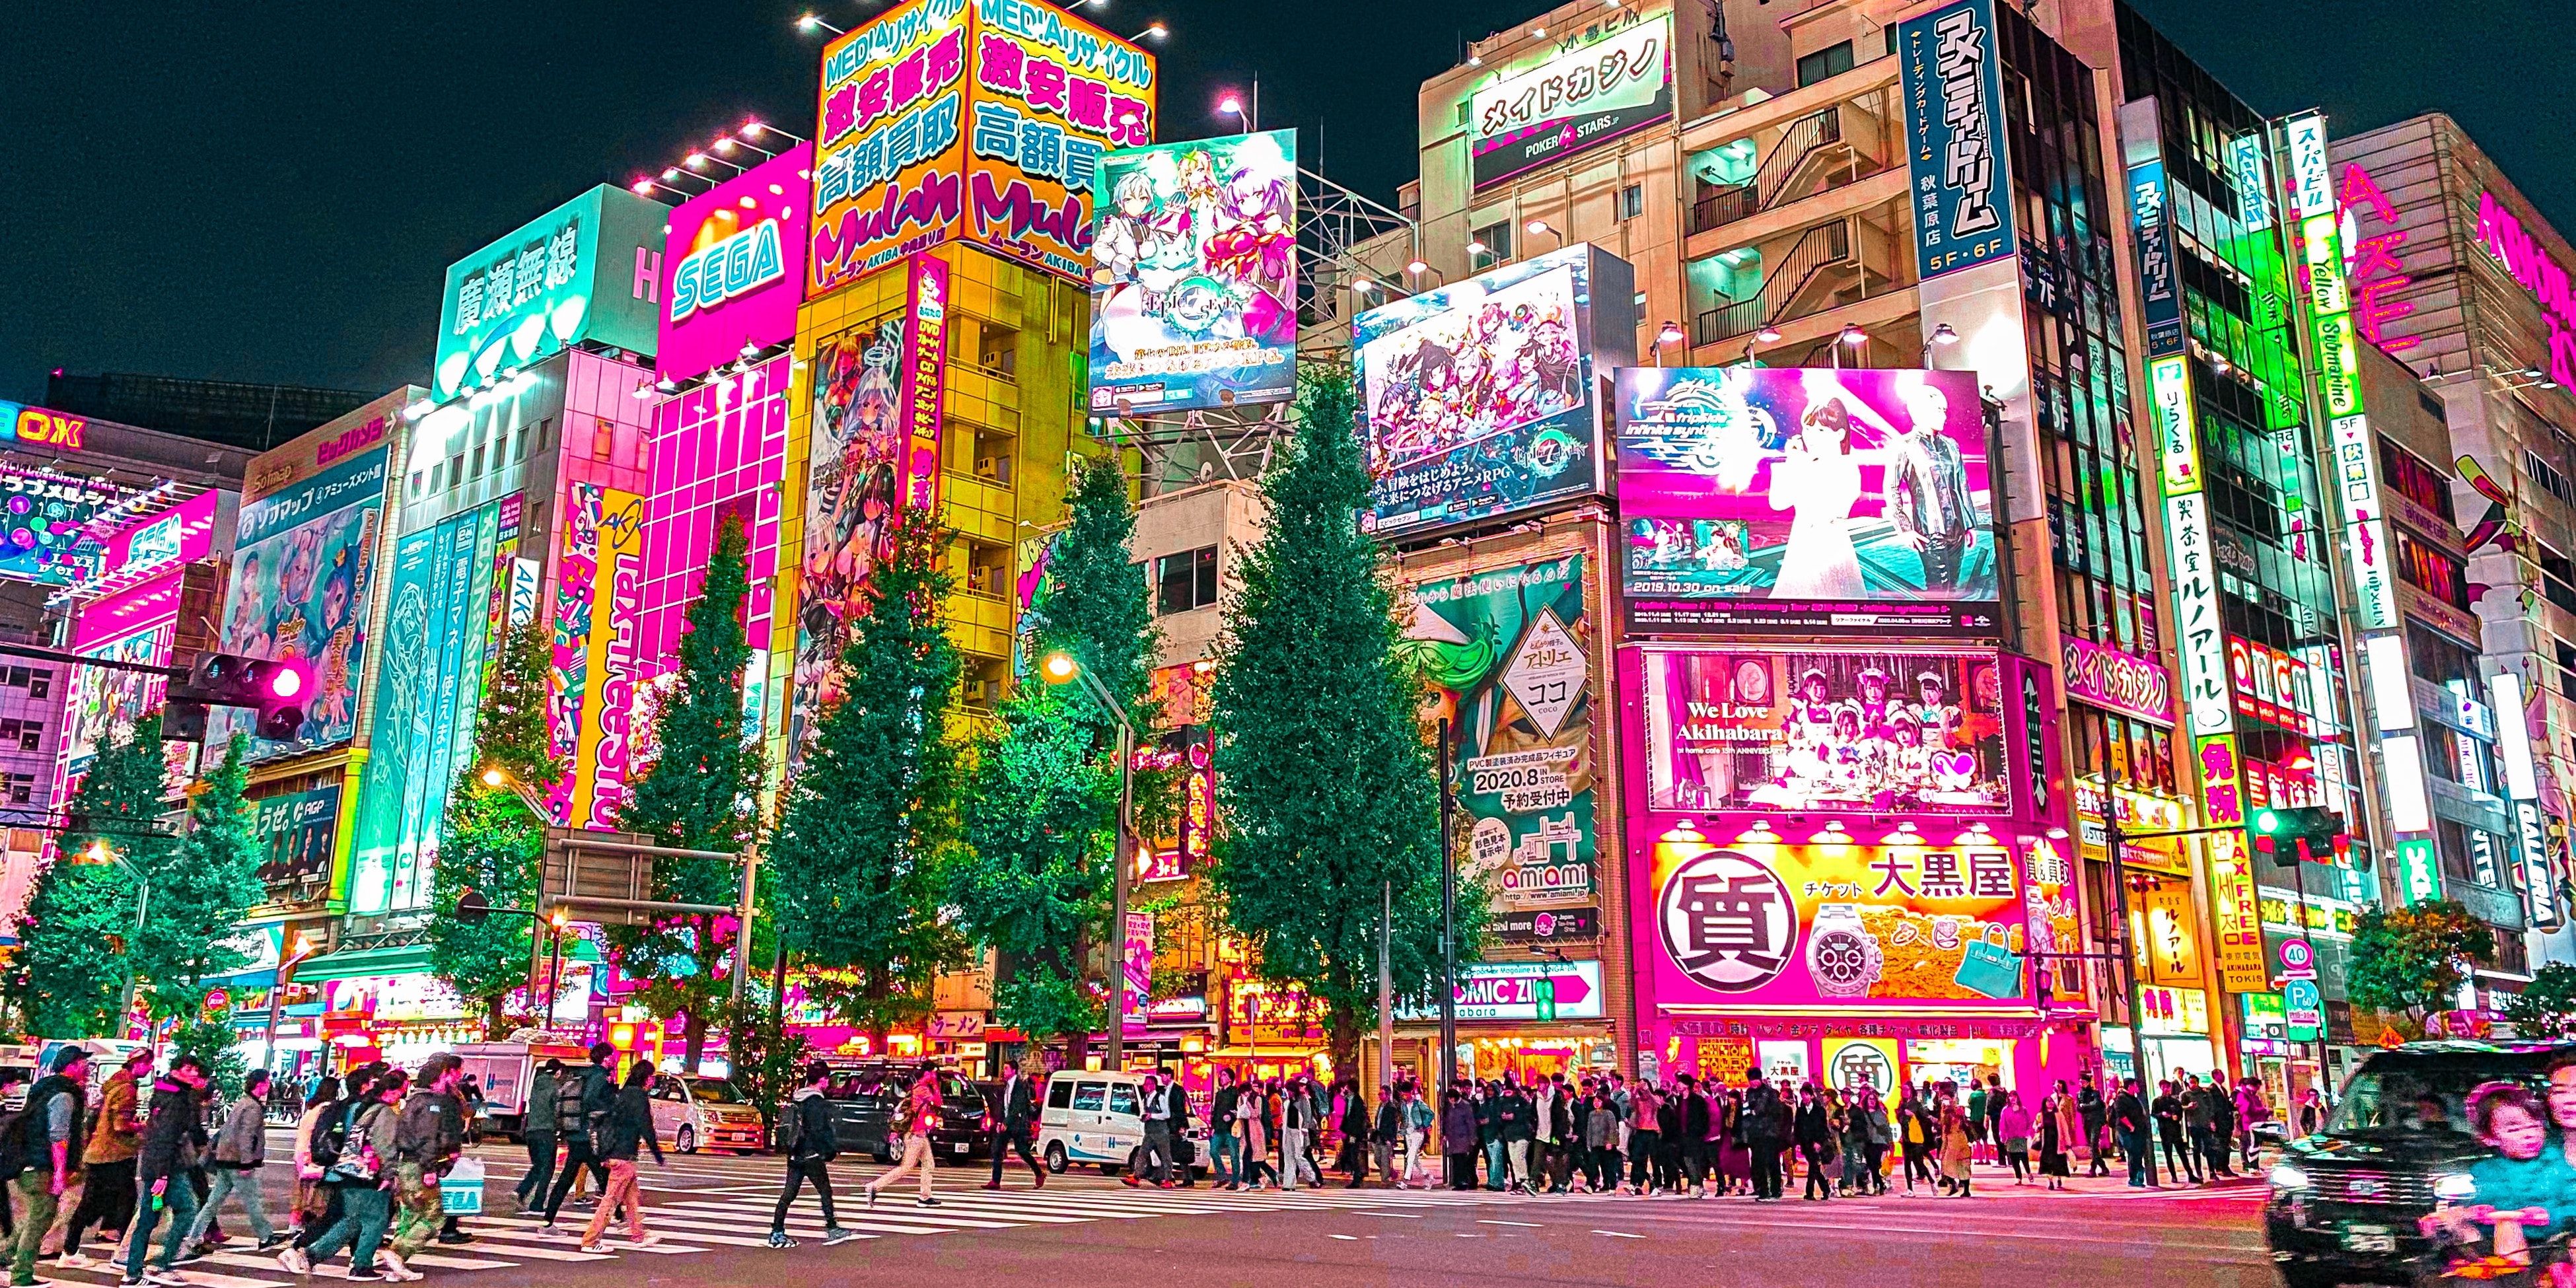 Anime Center Akihabara at Night in Japan